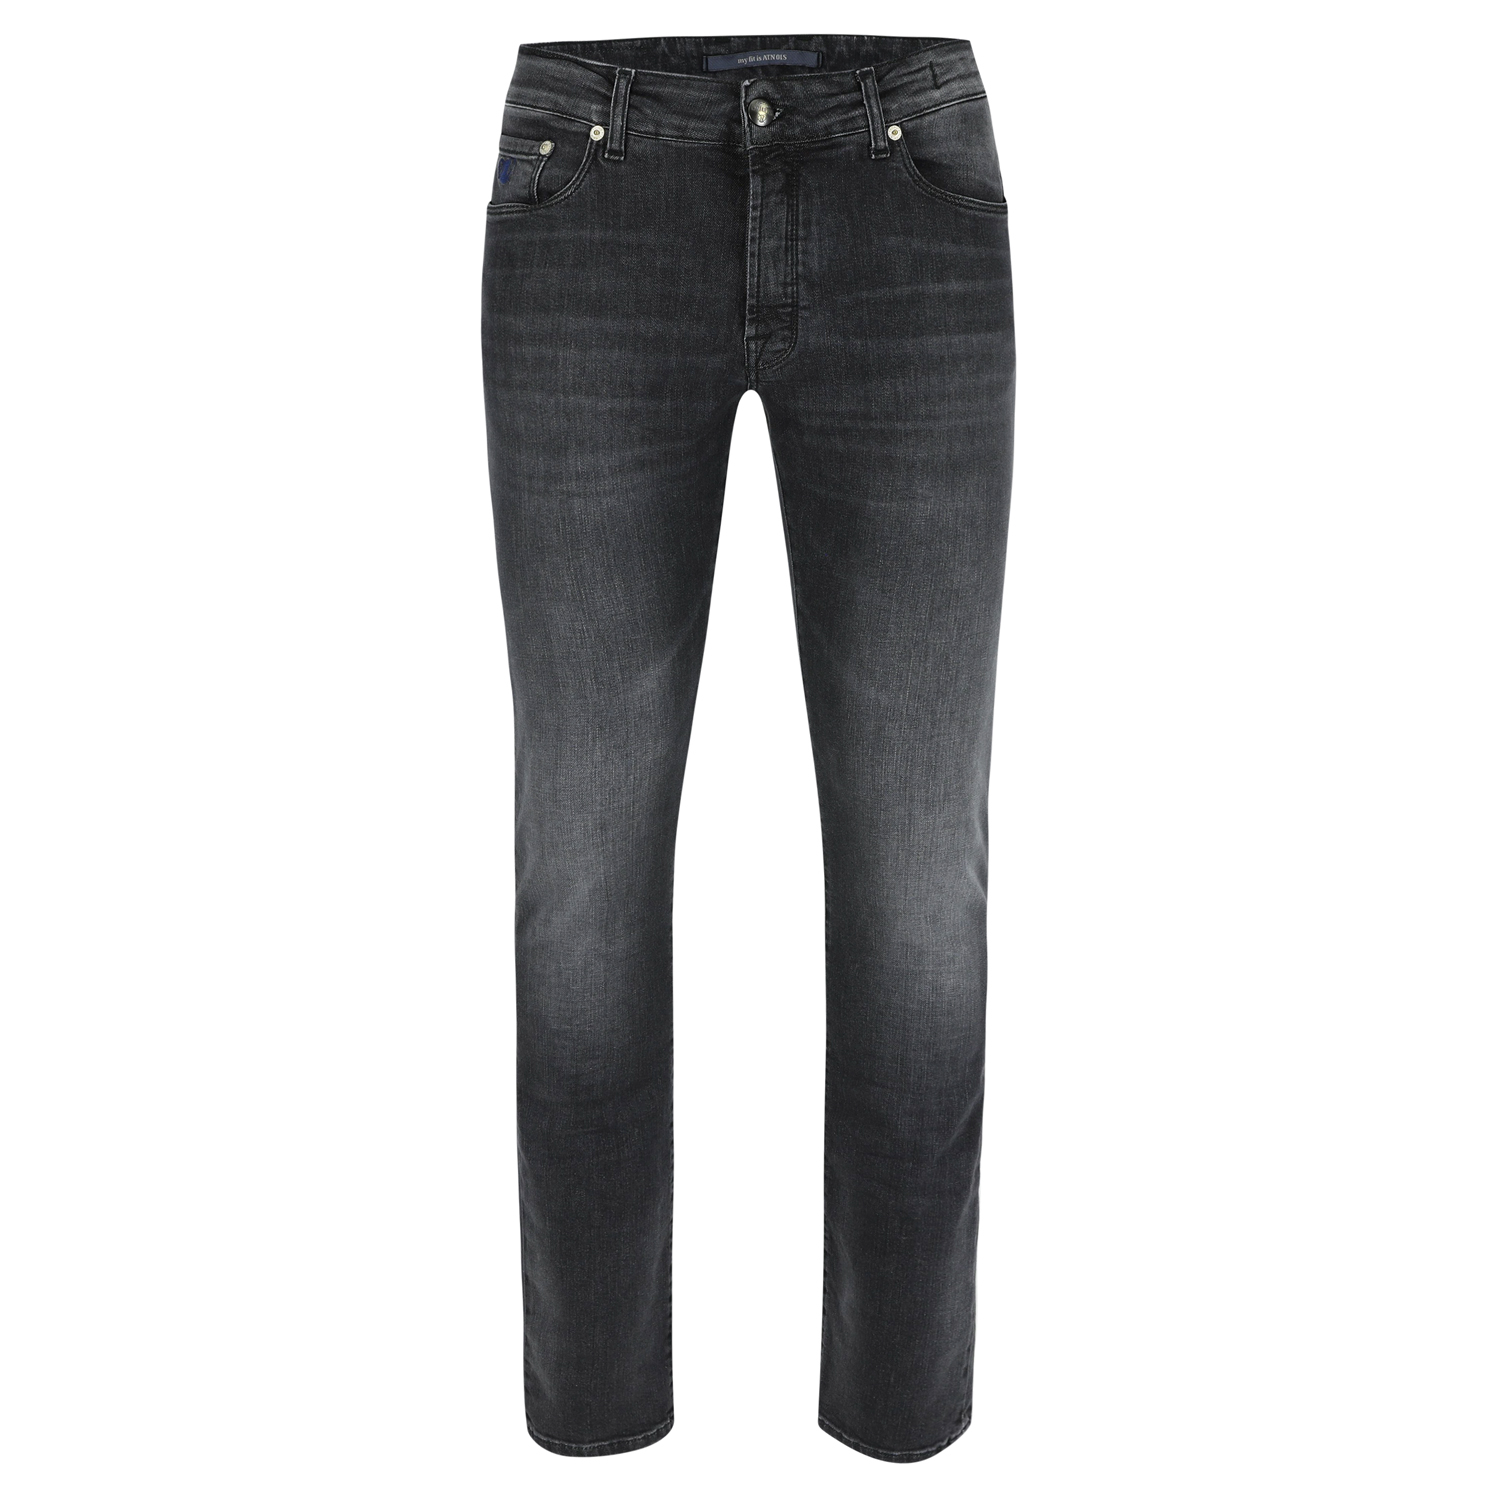 Atelier Noterman - Denim Jeans Used Wassing Zwart - 32/34 - Heren